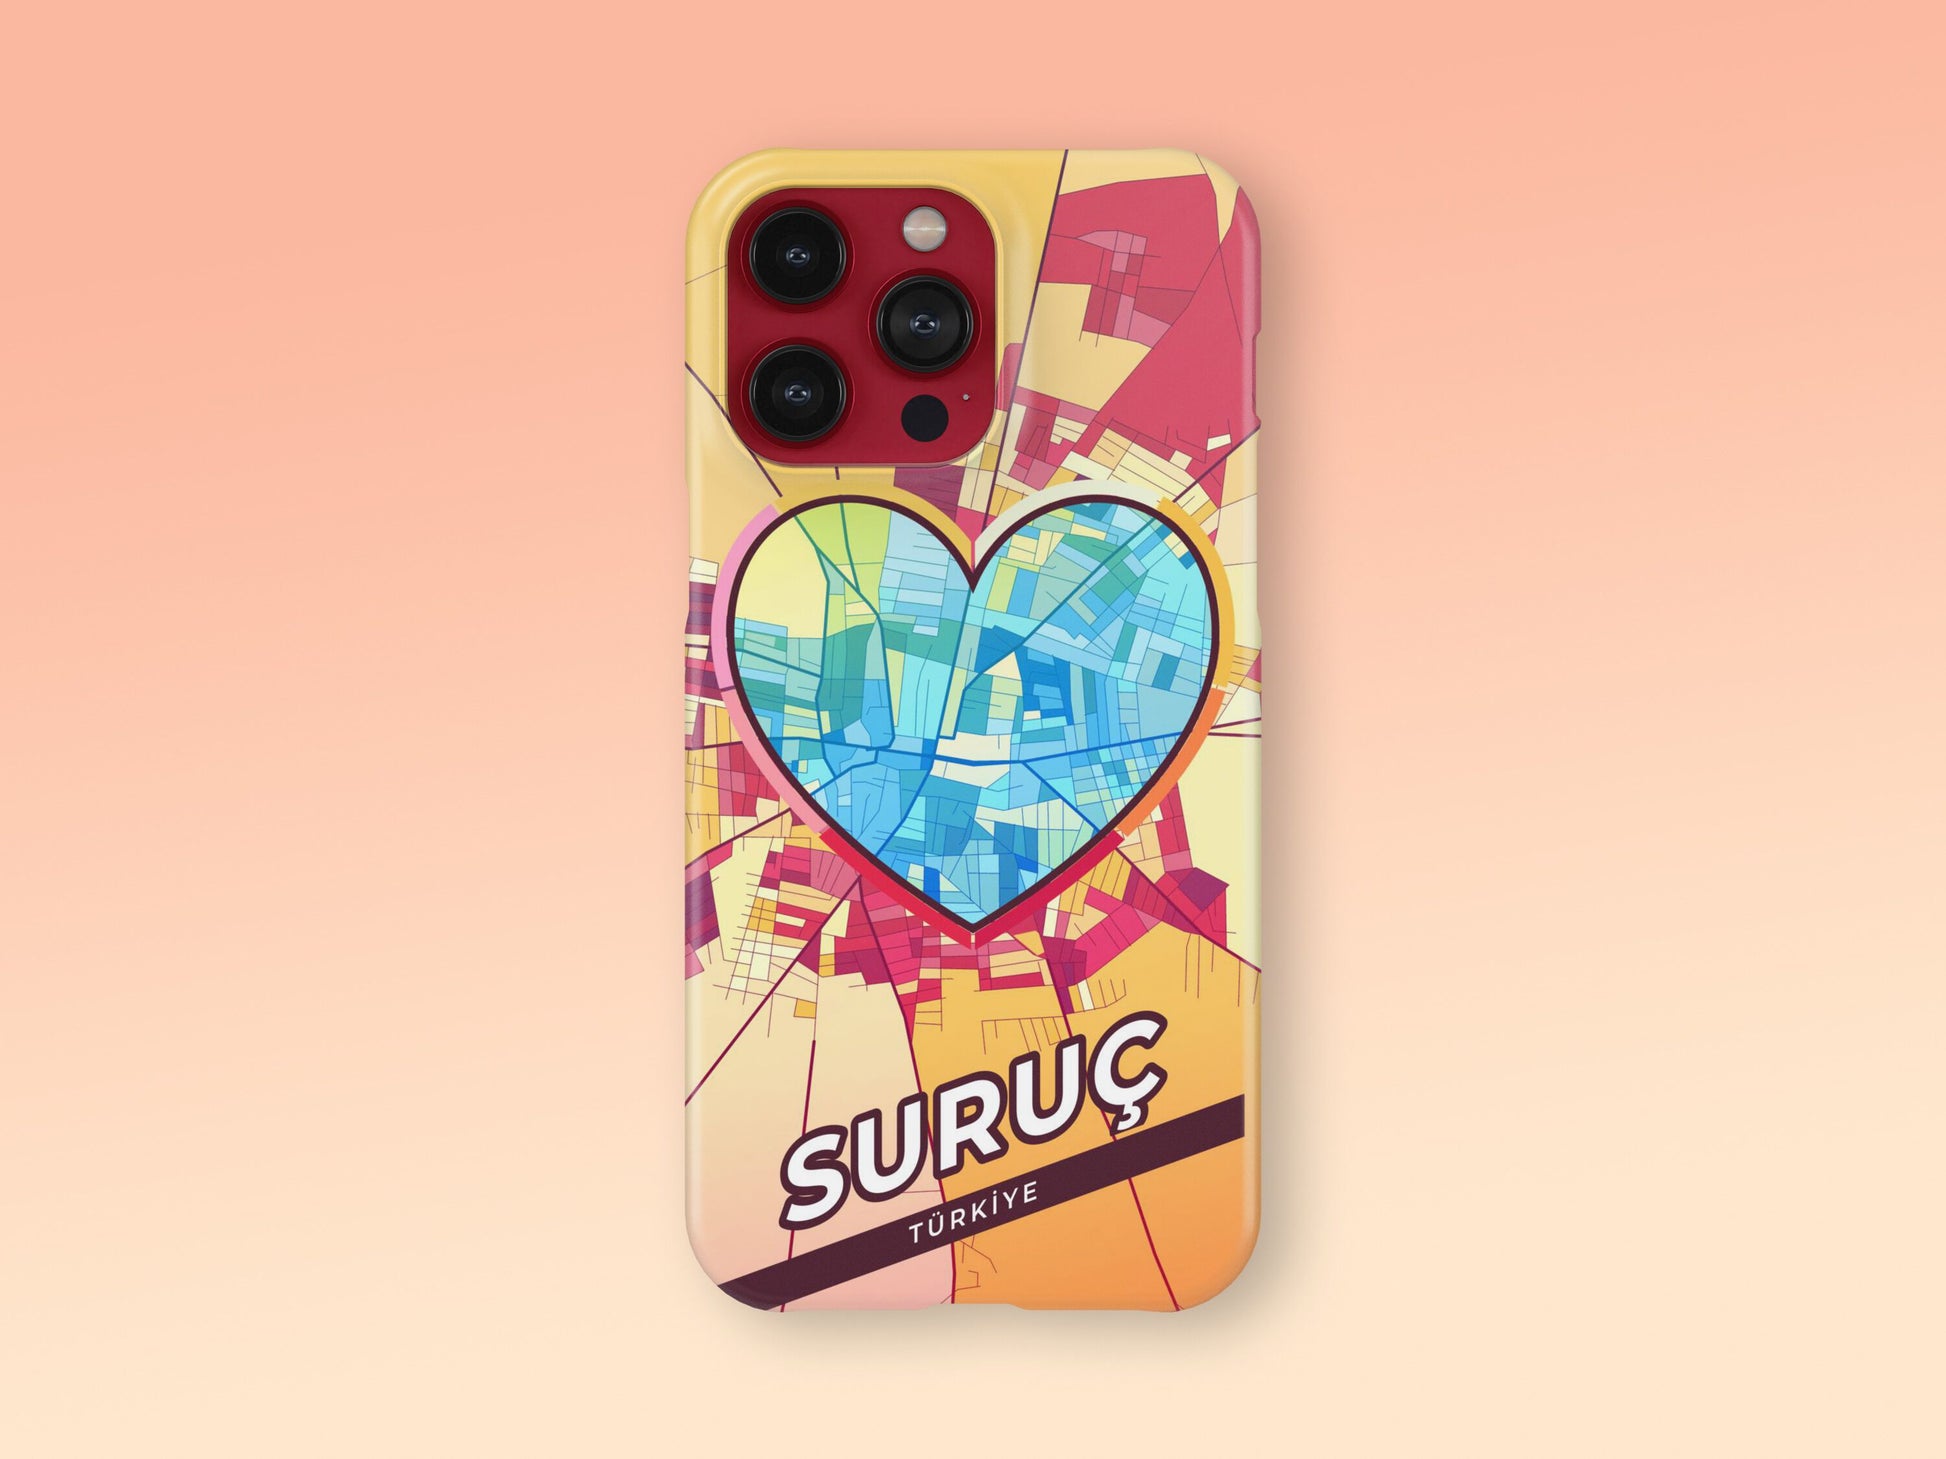 Suruç Turkey slim phone case with colorful icon 2